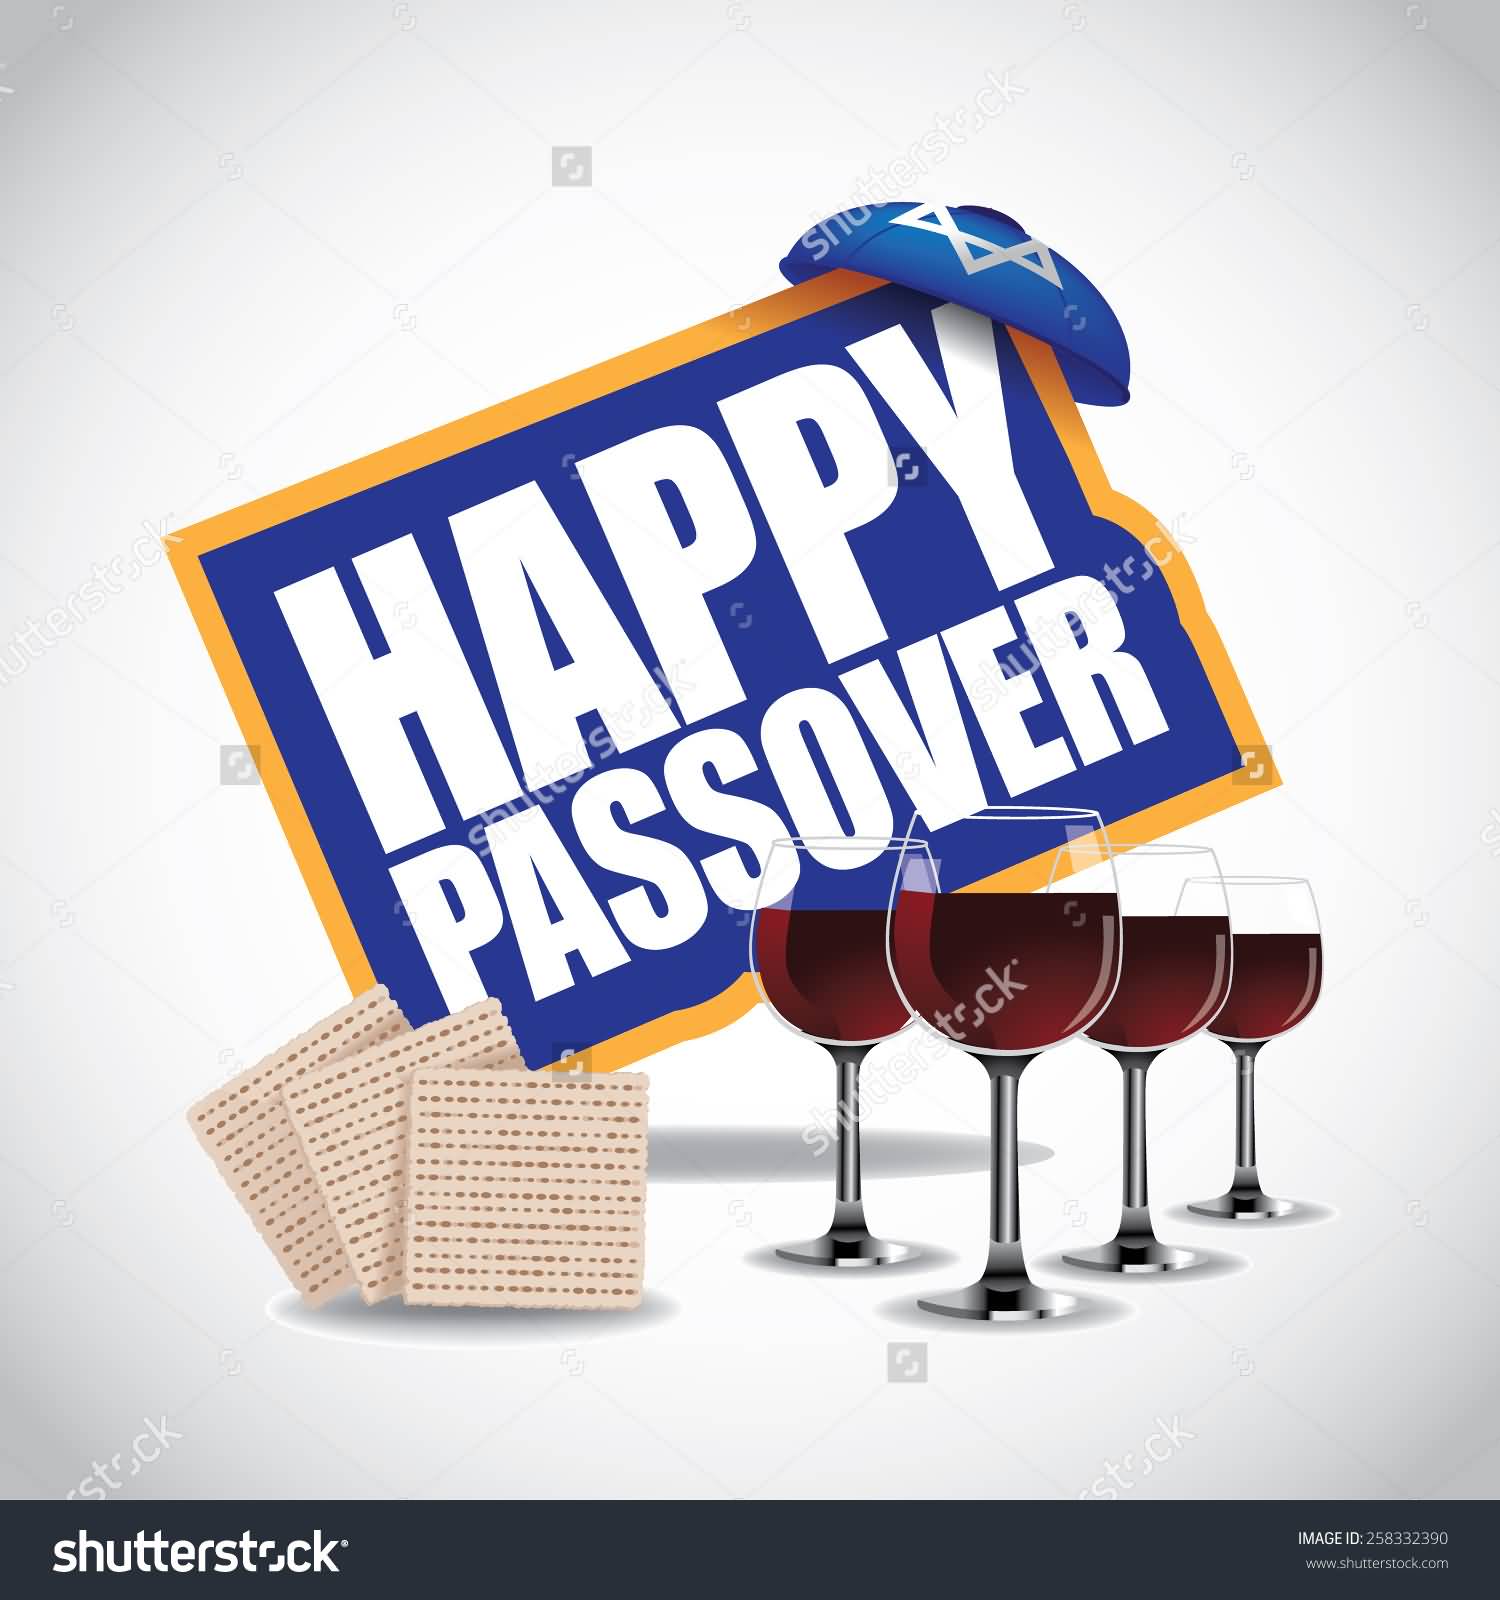 Happy Passover Wine Glasses Picture